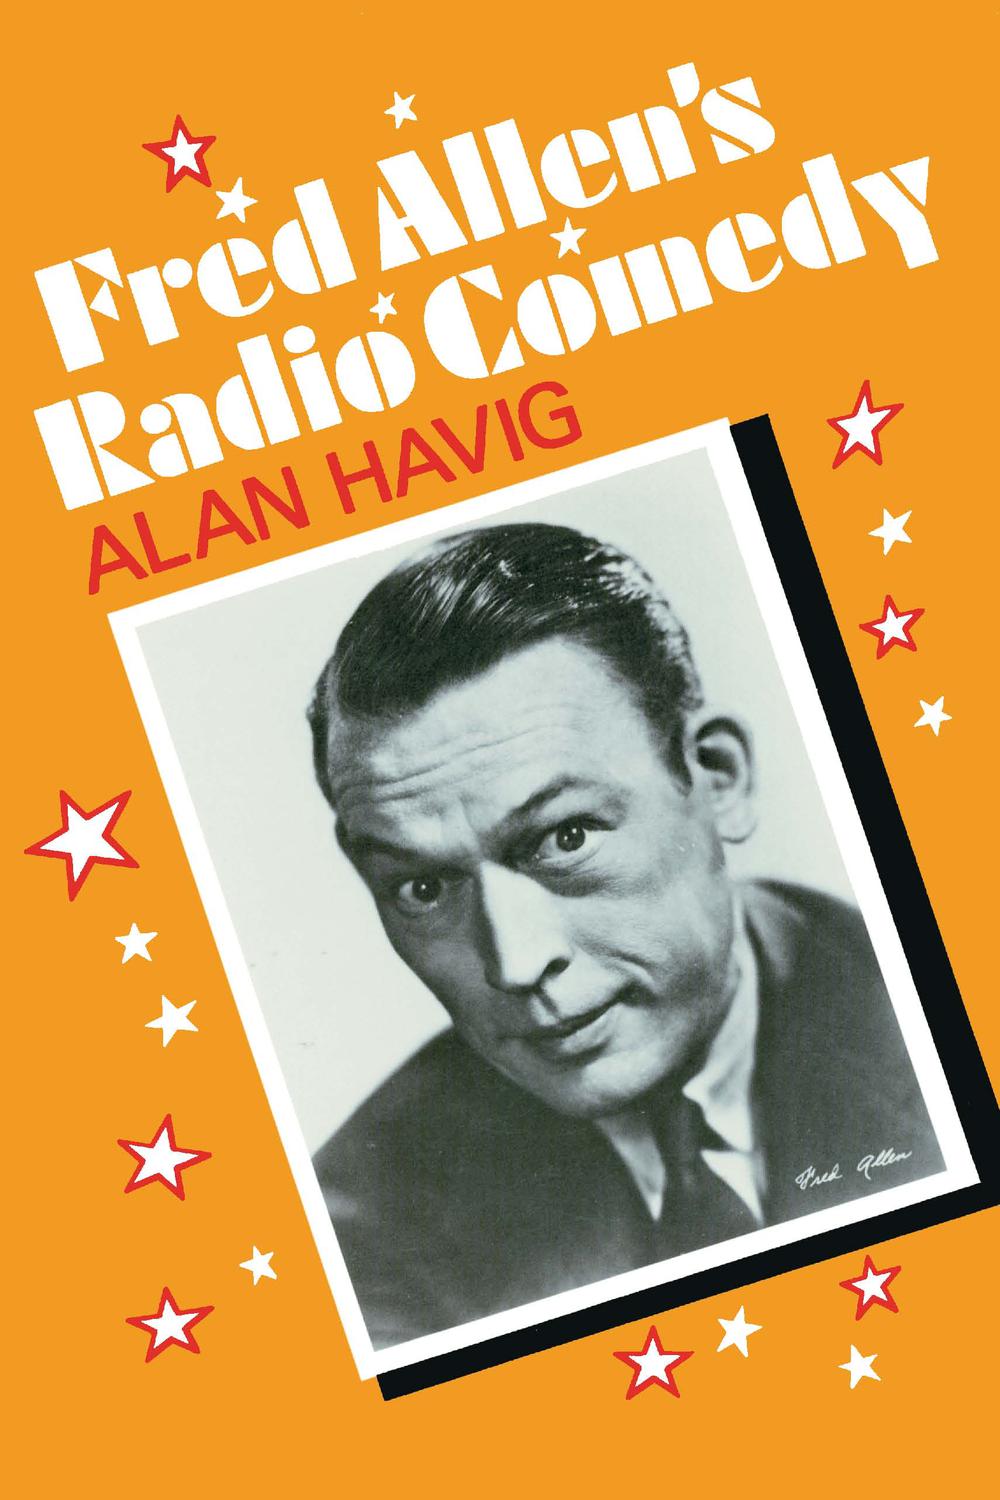 Fred Allen's Radio Comedy - Alan Havig